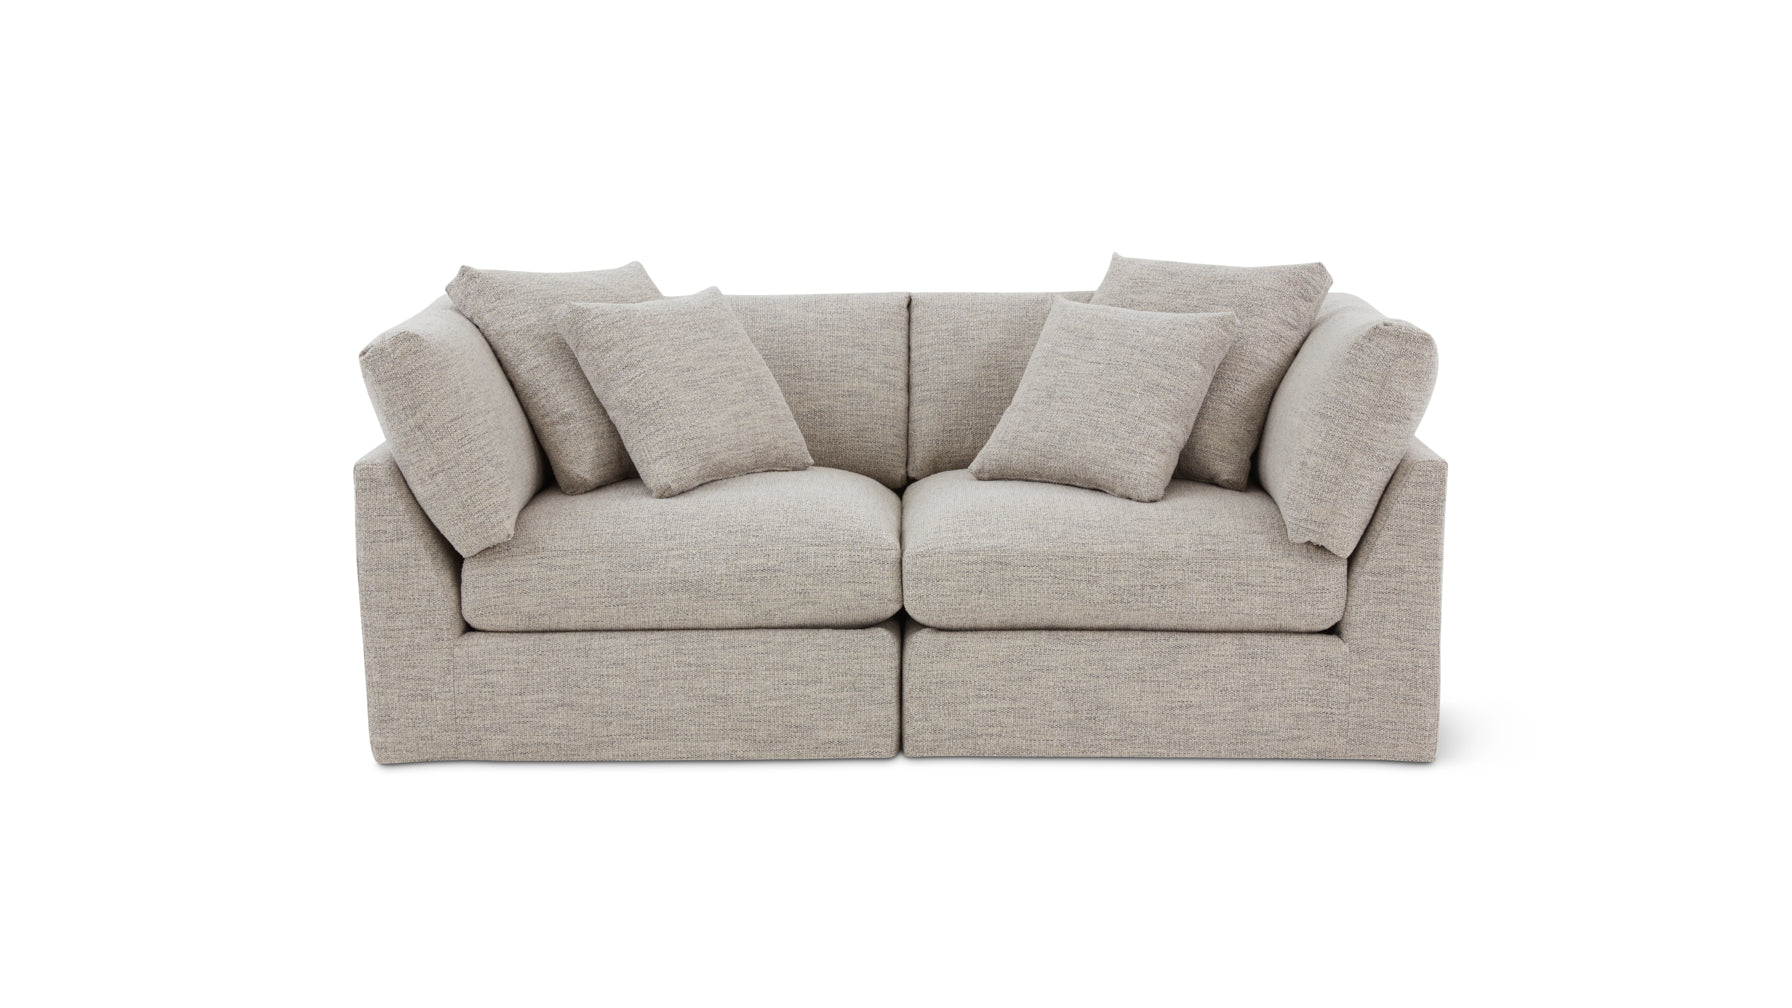 Get Together™ 2-Piece Modular Sofa, Large, Oatmeal - Image 1